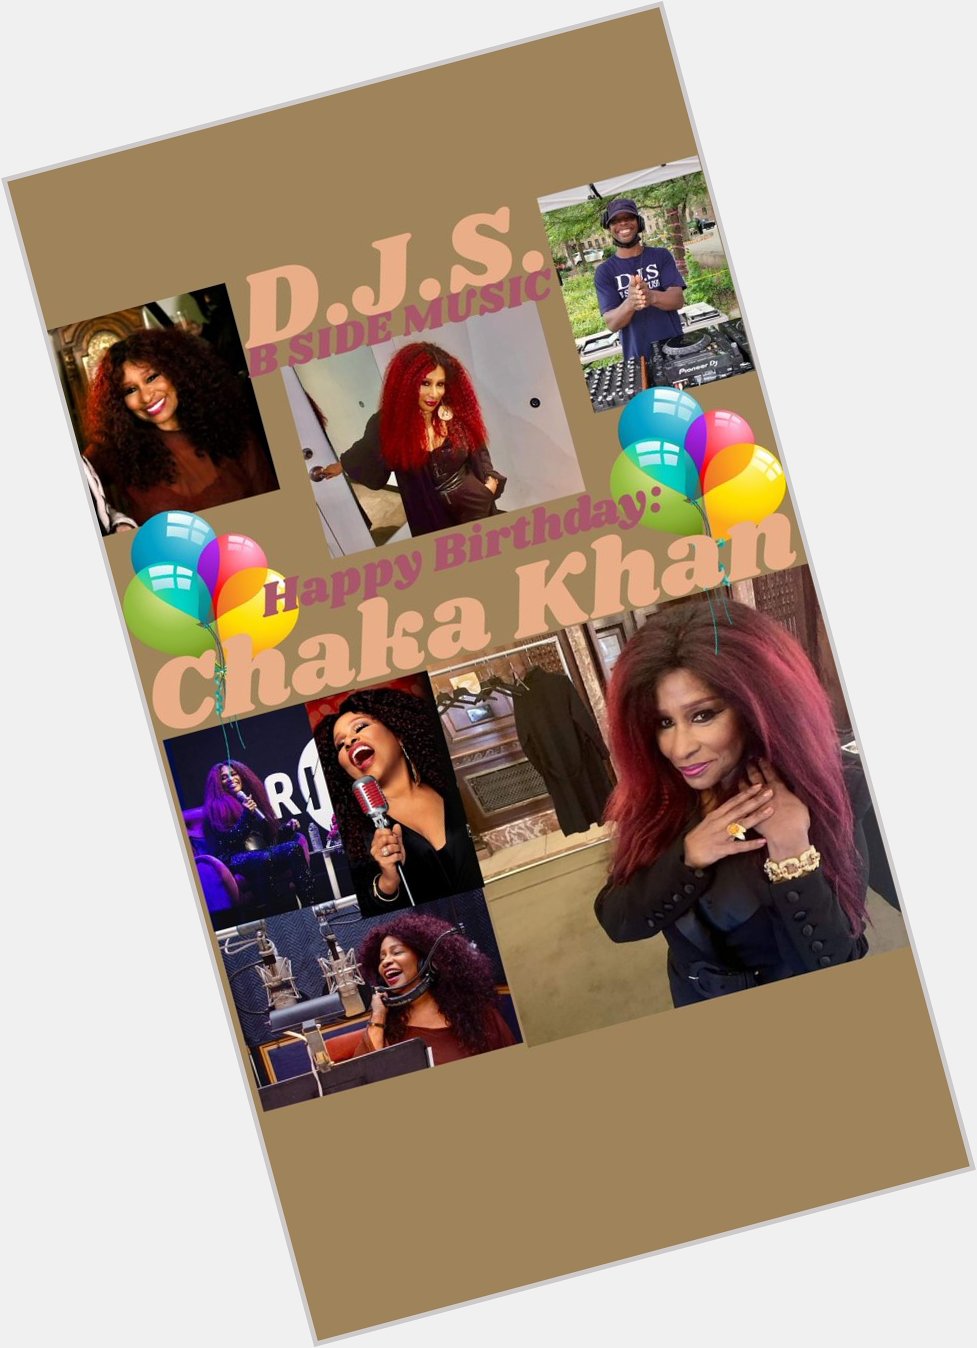 I(D.J.S.)\"B SIDE MUSIC\" saying Happy Birthday to Singer/Musician/Band: \"CHAKA KHAN\"!!! 